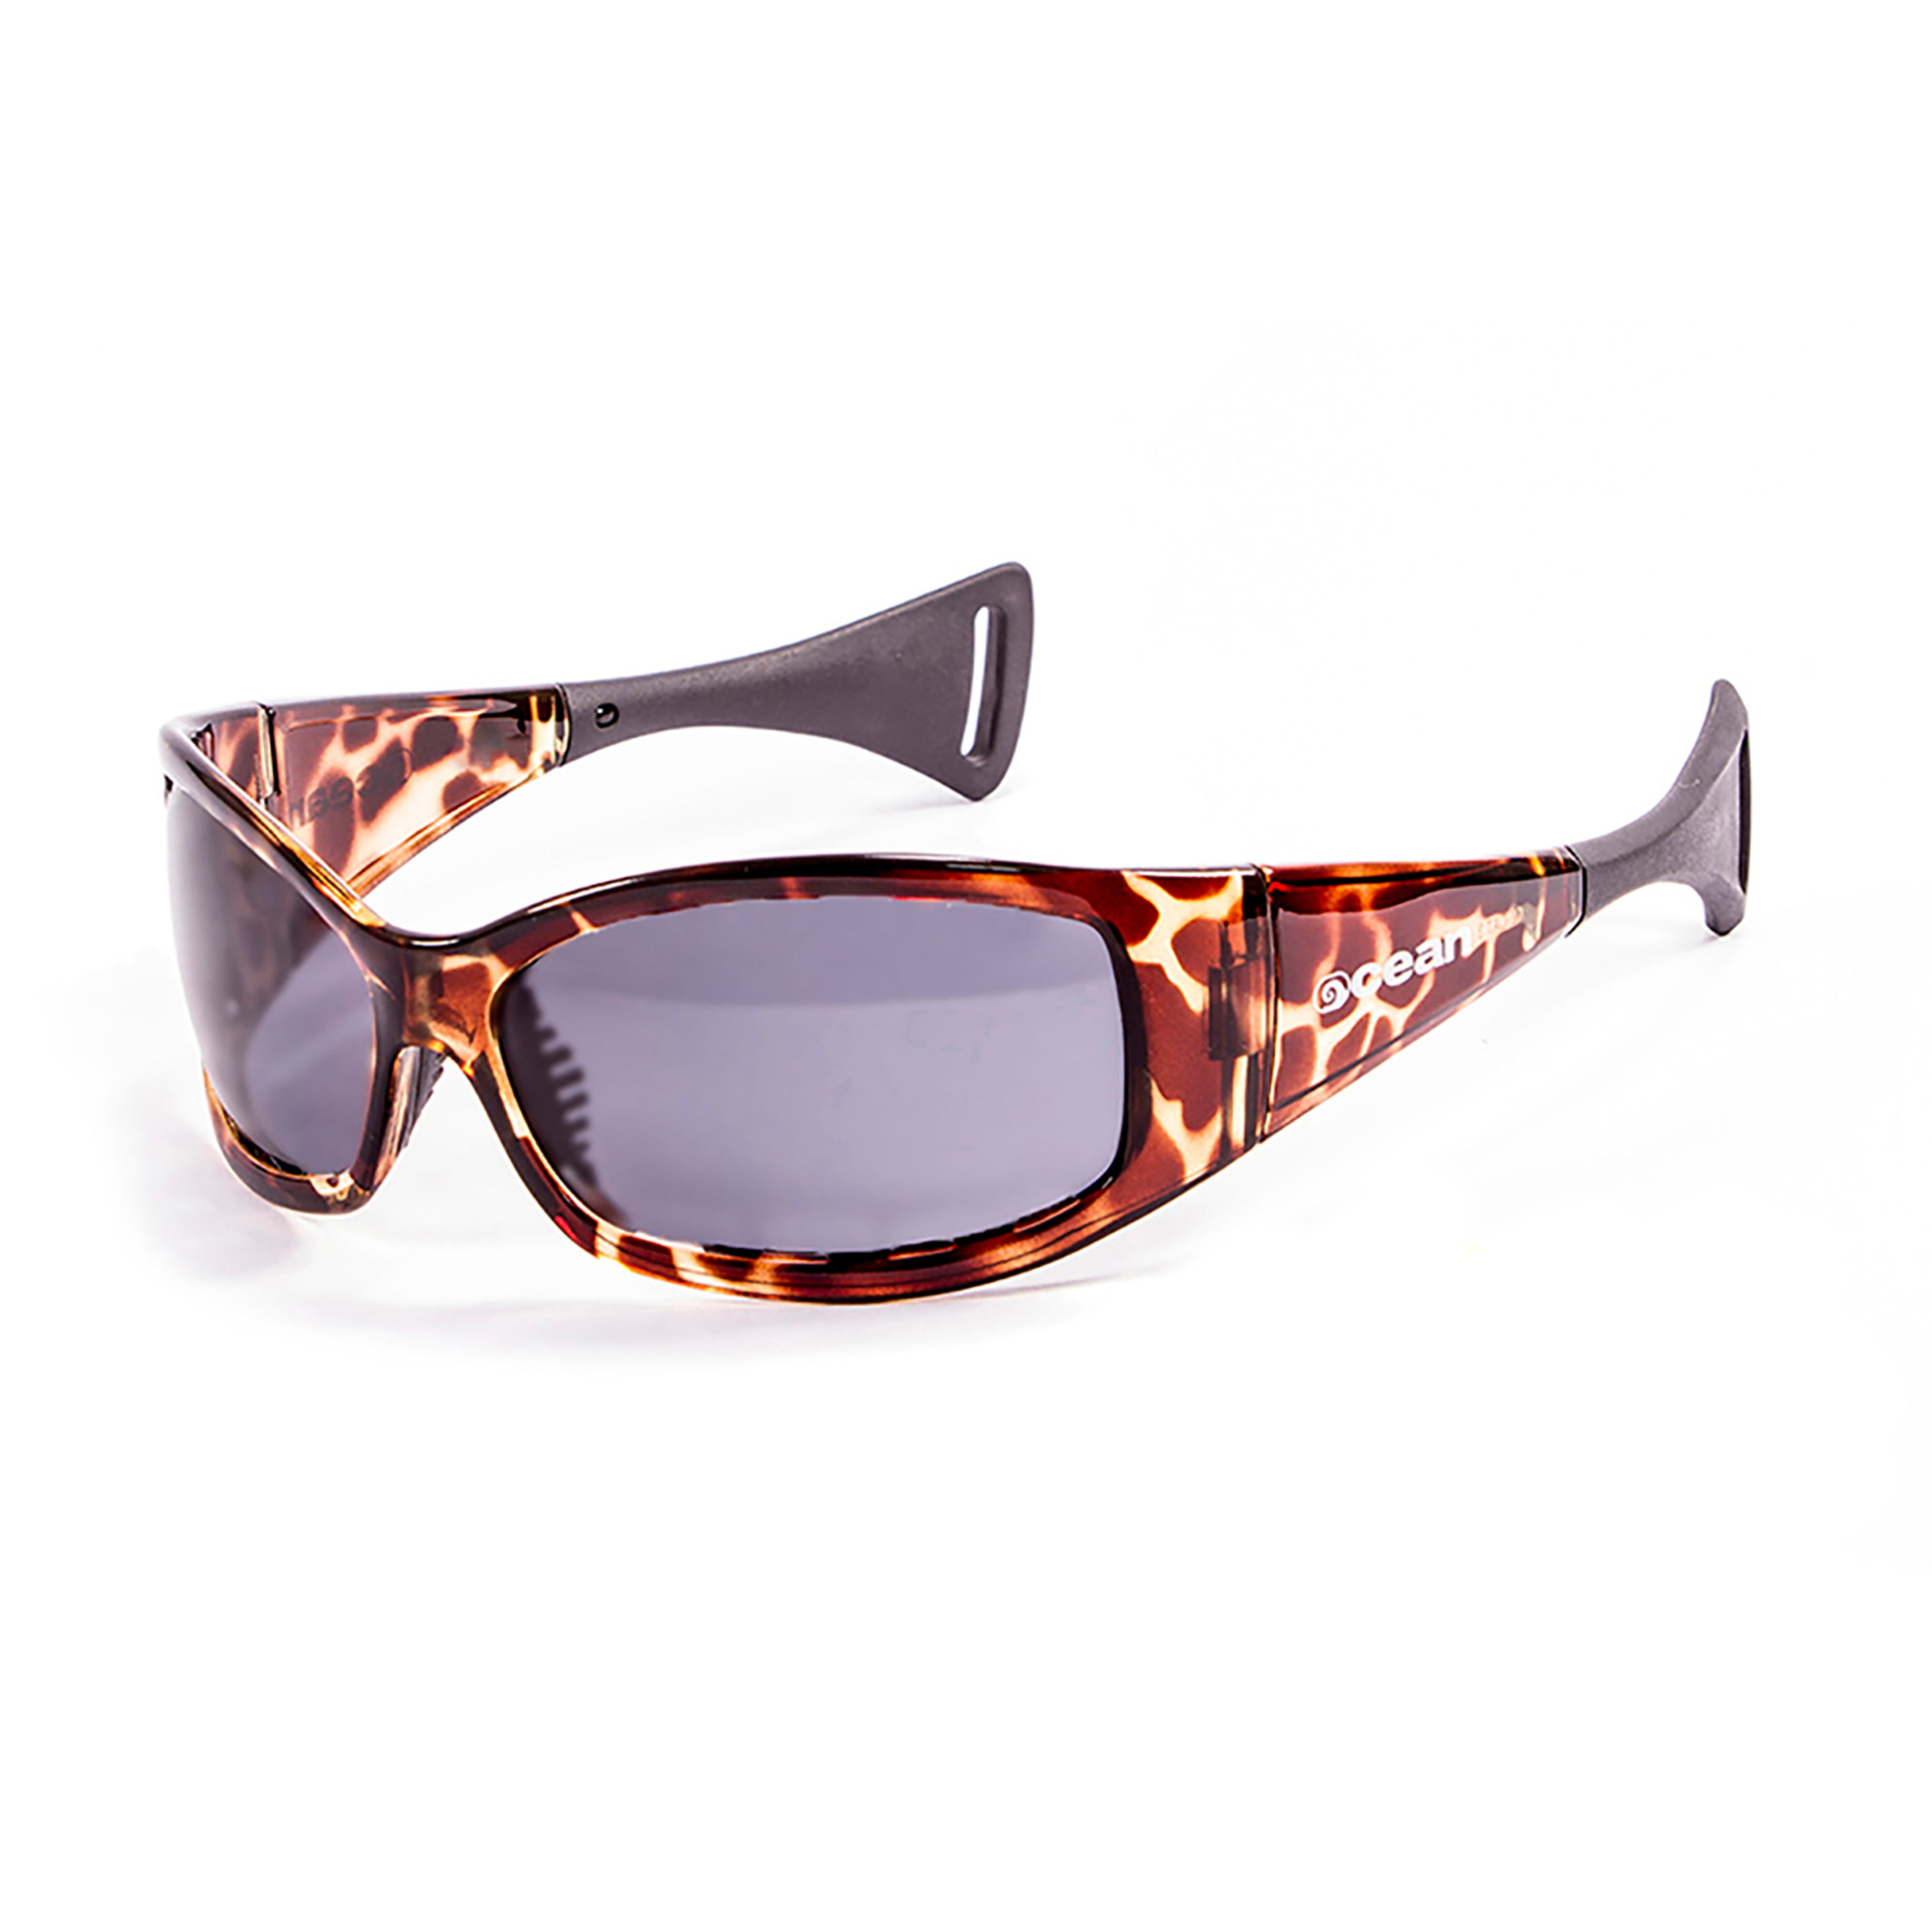 Gafas De Sol Técnicas Para La Práctica De Deportes De Agua  Mentaway Ocean Sunglasses - Marron  MKP